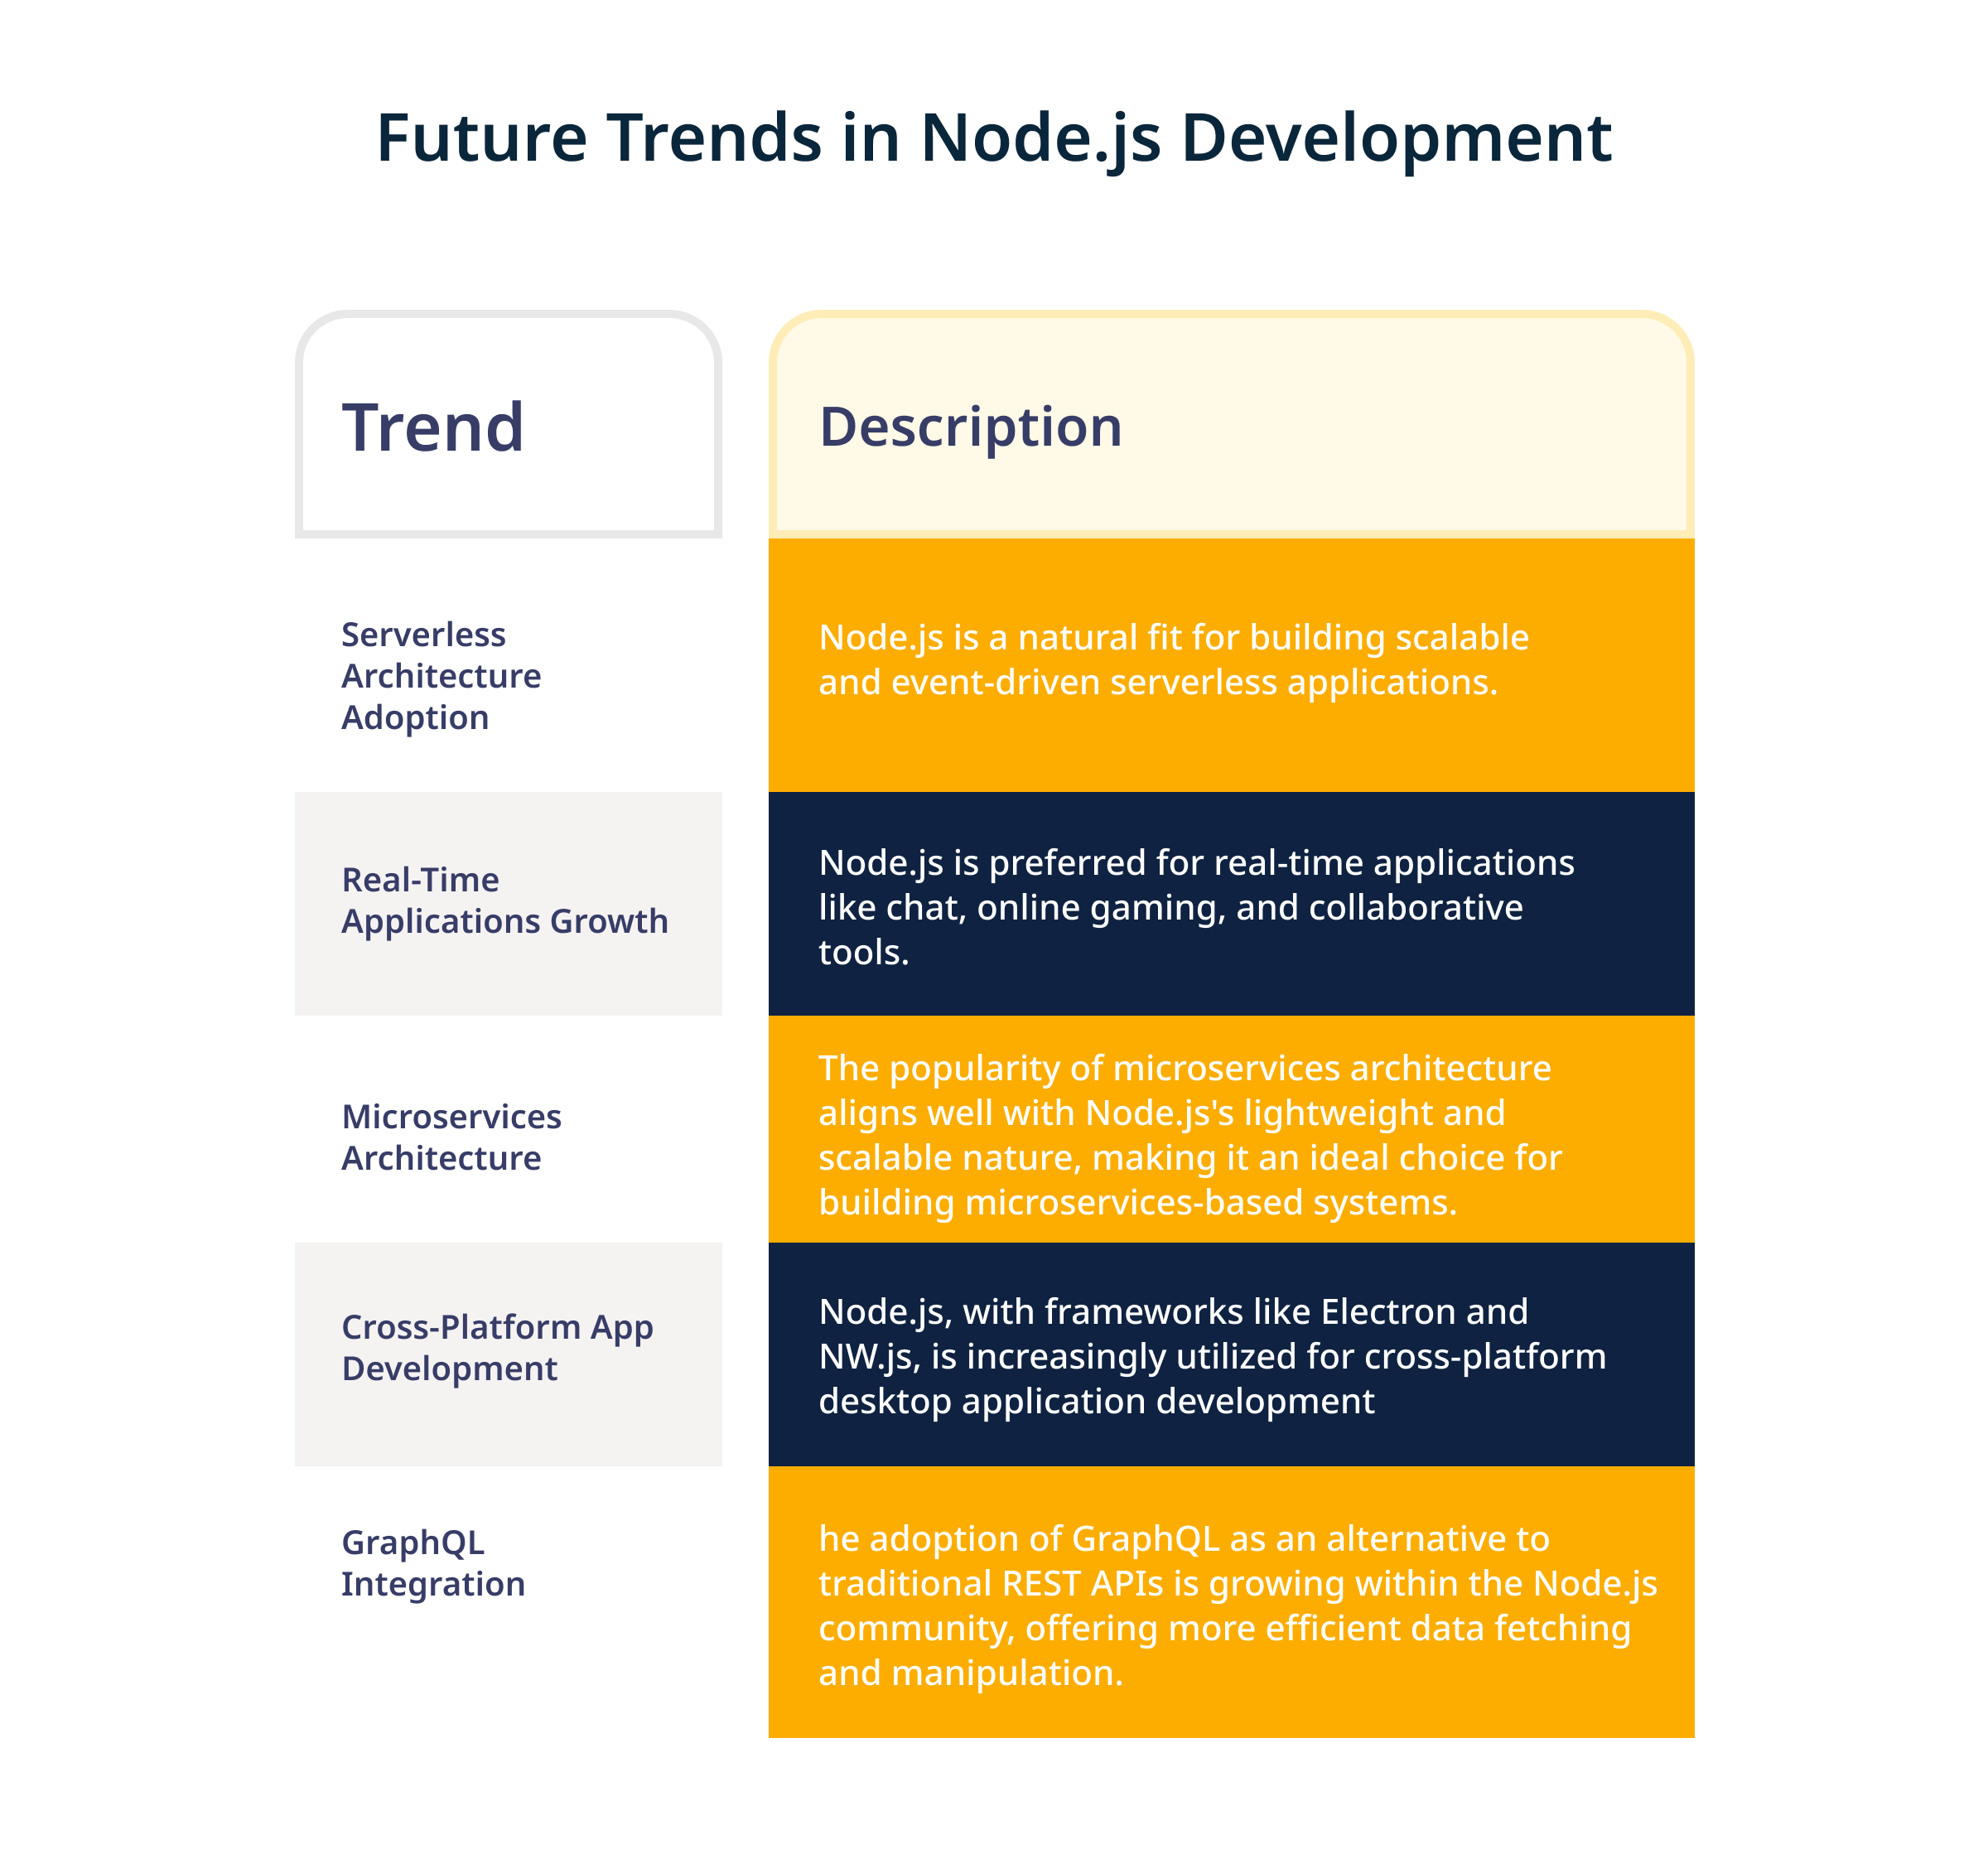 Future trends in Node.js development